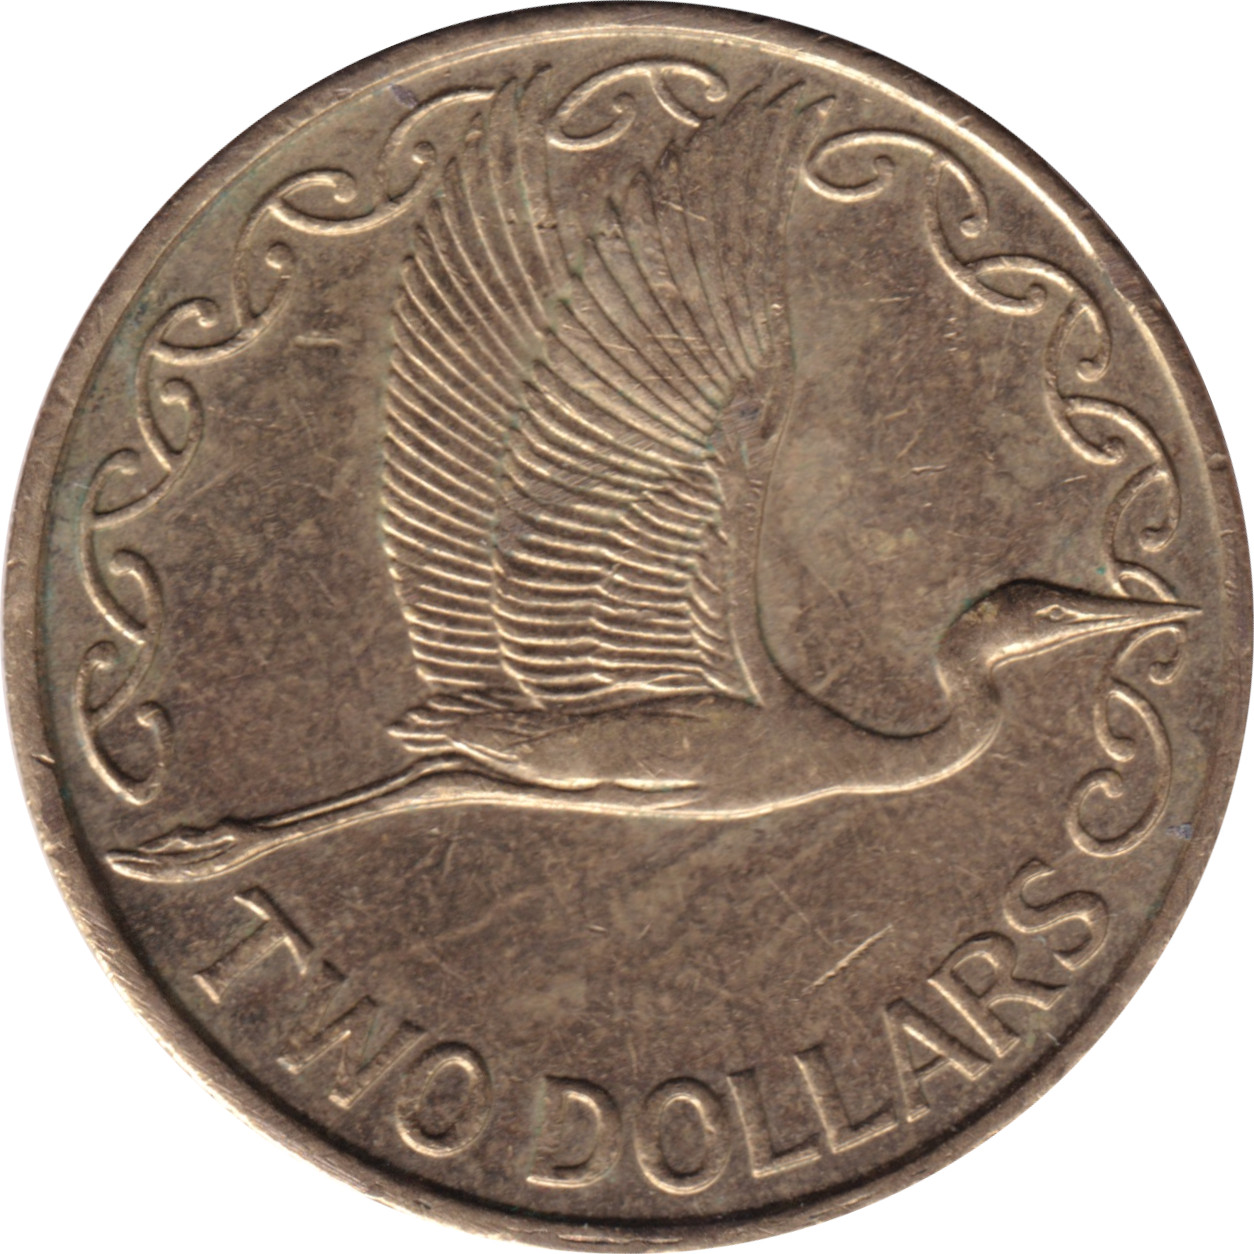 2 dollars - Elizabeth II - Tête agée